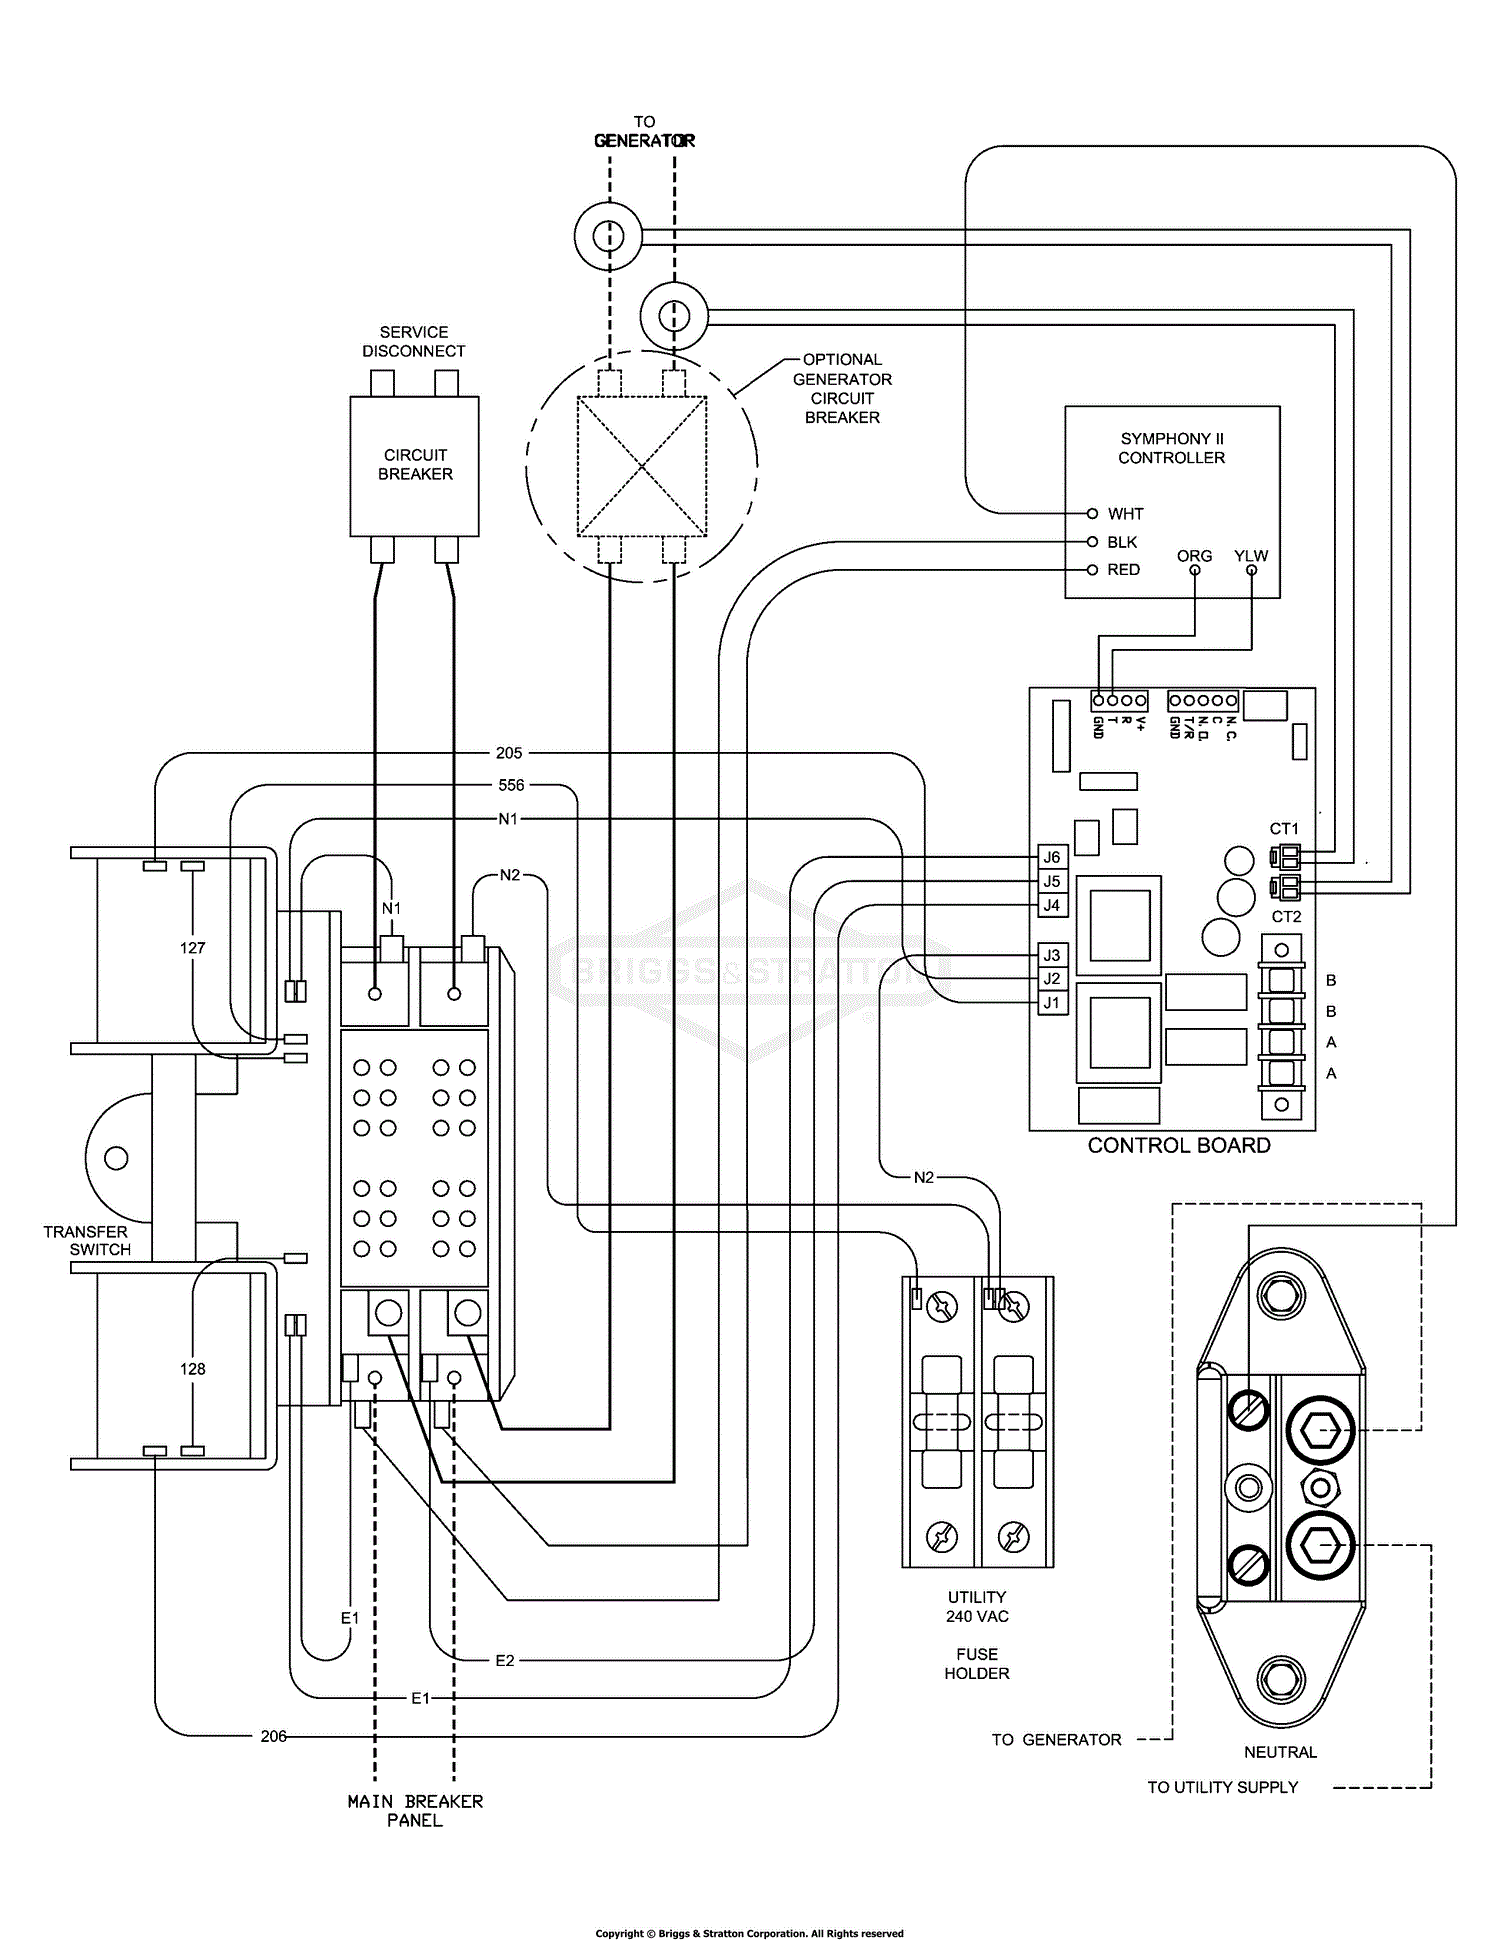 Generac Automatic Transfer Switch Wiring Diagram from az417944.vo.msecnd.net